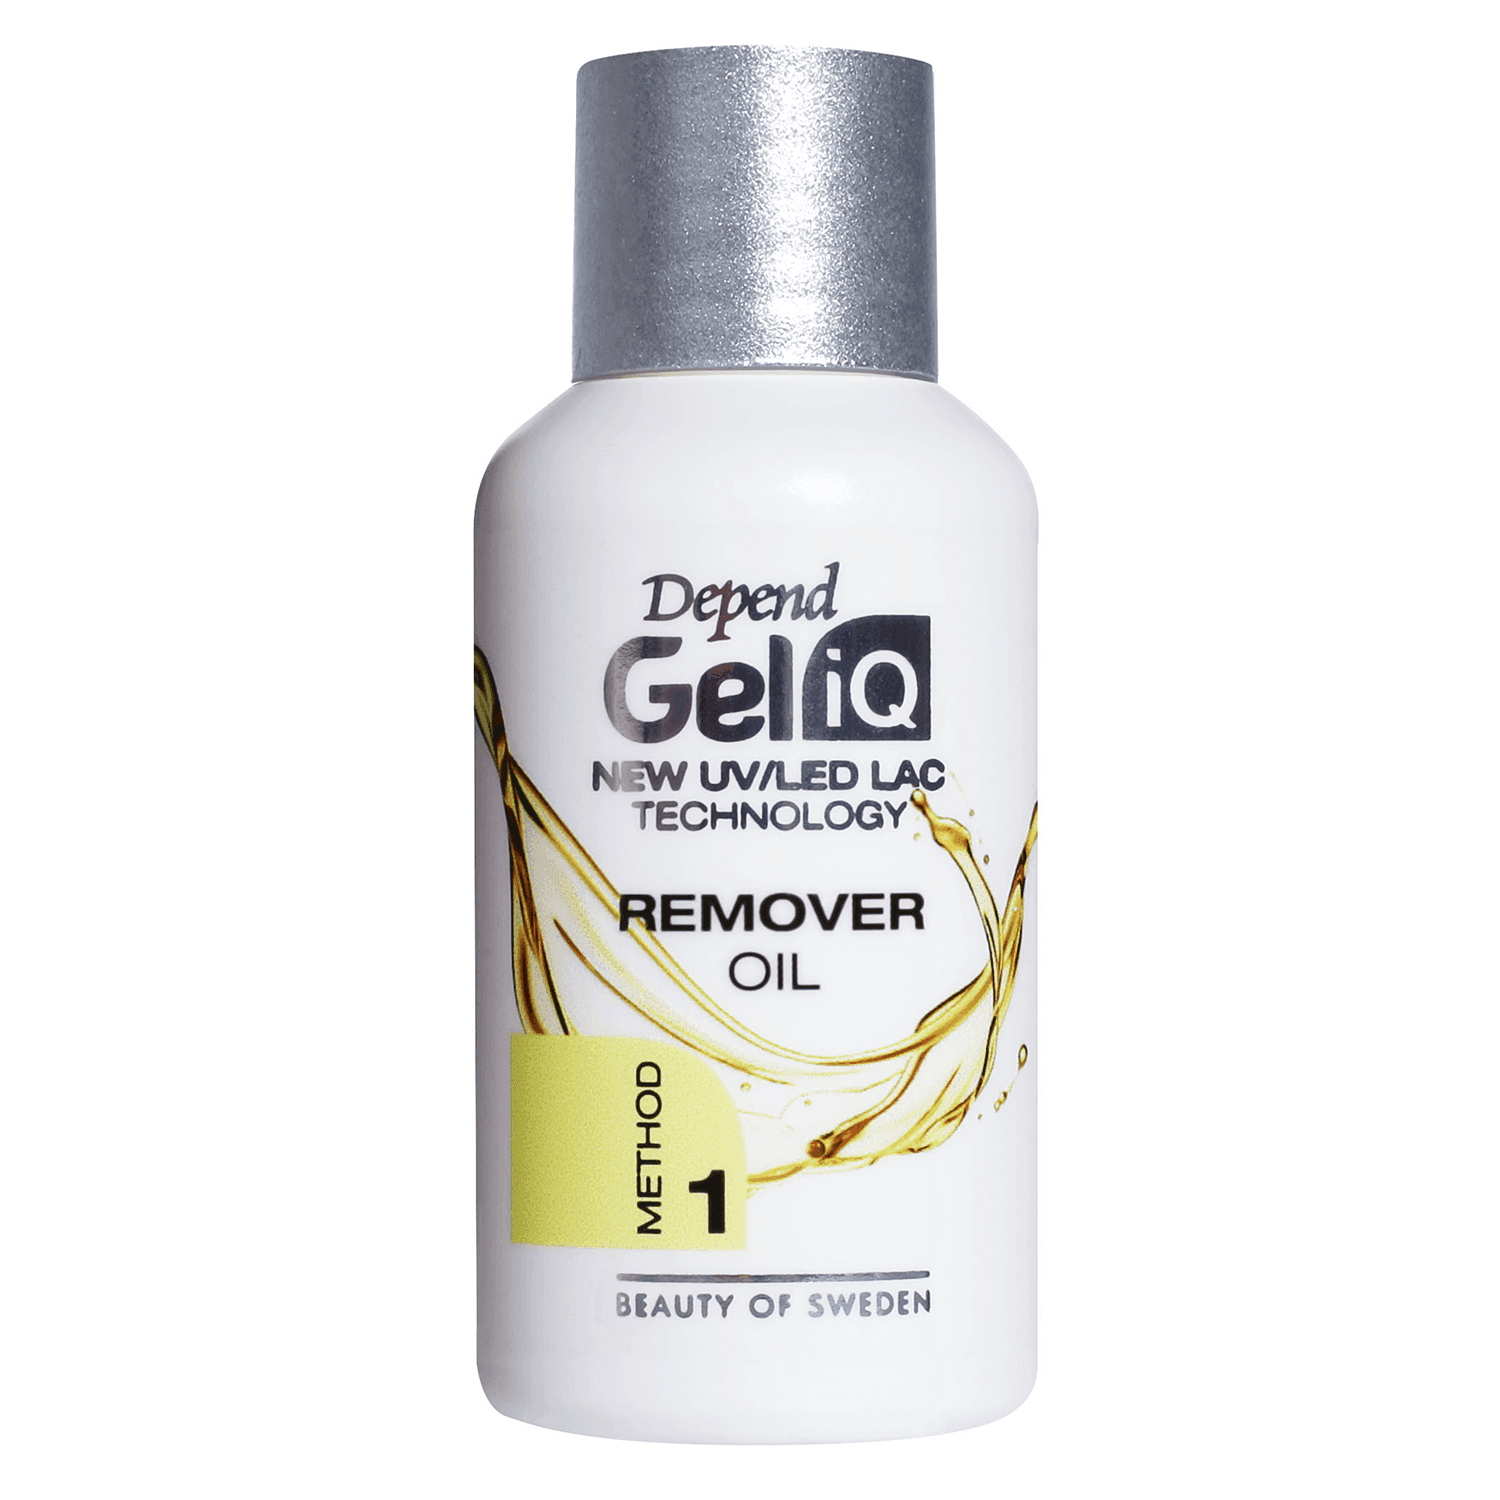 Gel iQ Cleanser & Remover - Remover Oil Method 1